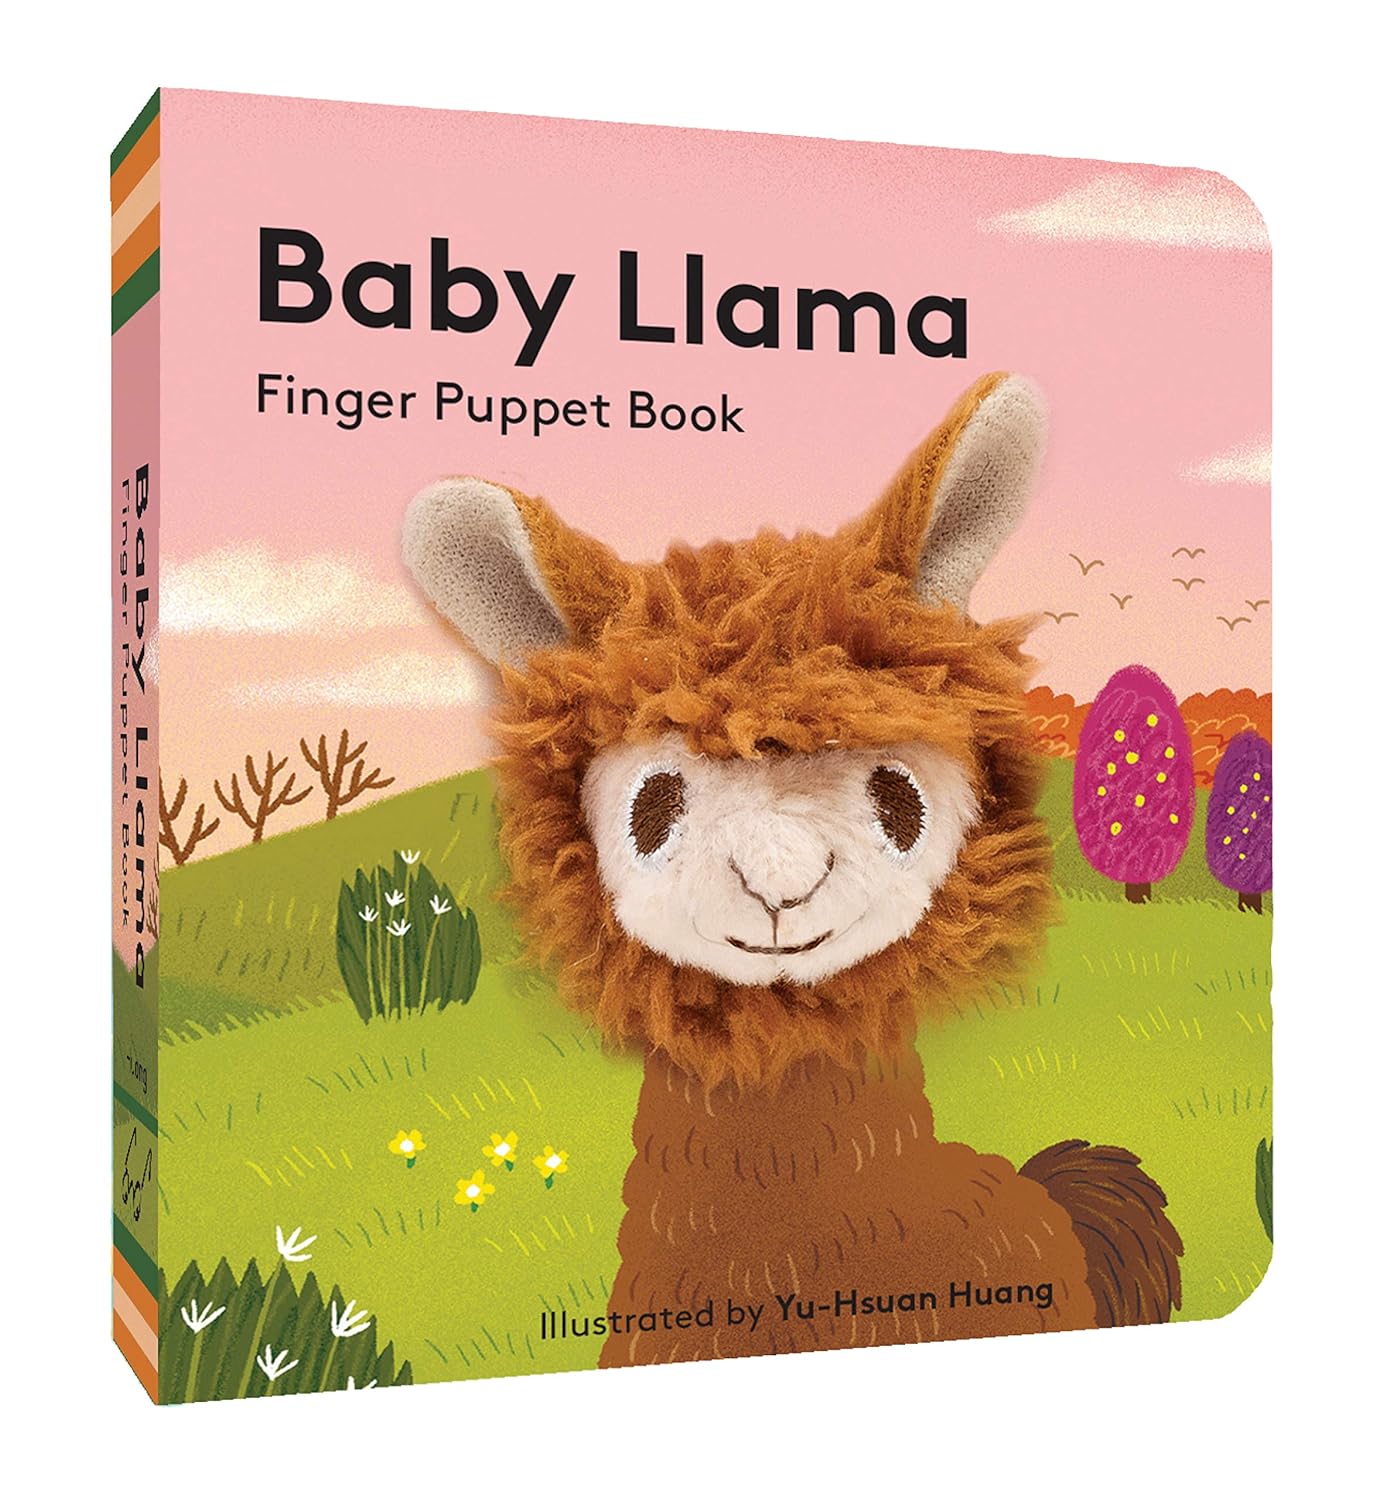 FINGER PUPPET BOOK - BABY LLAMA